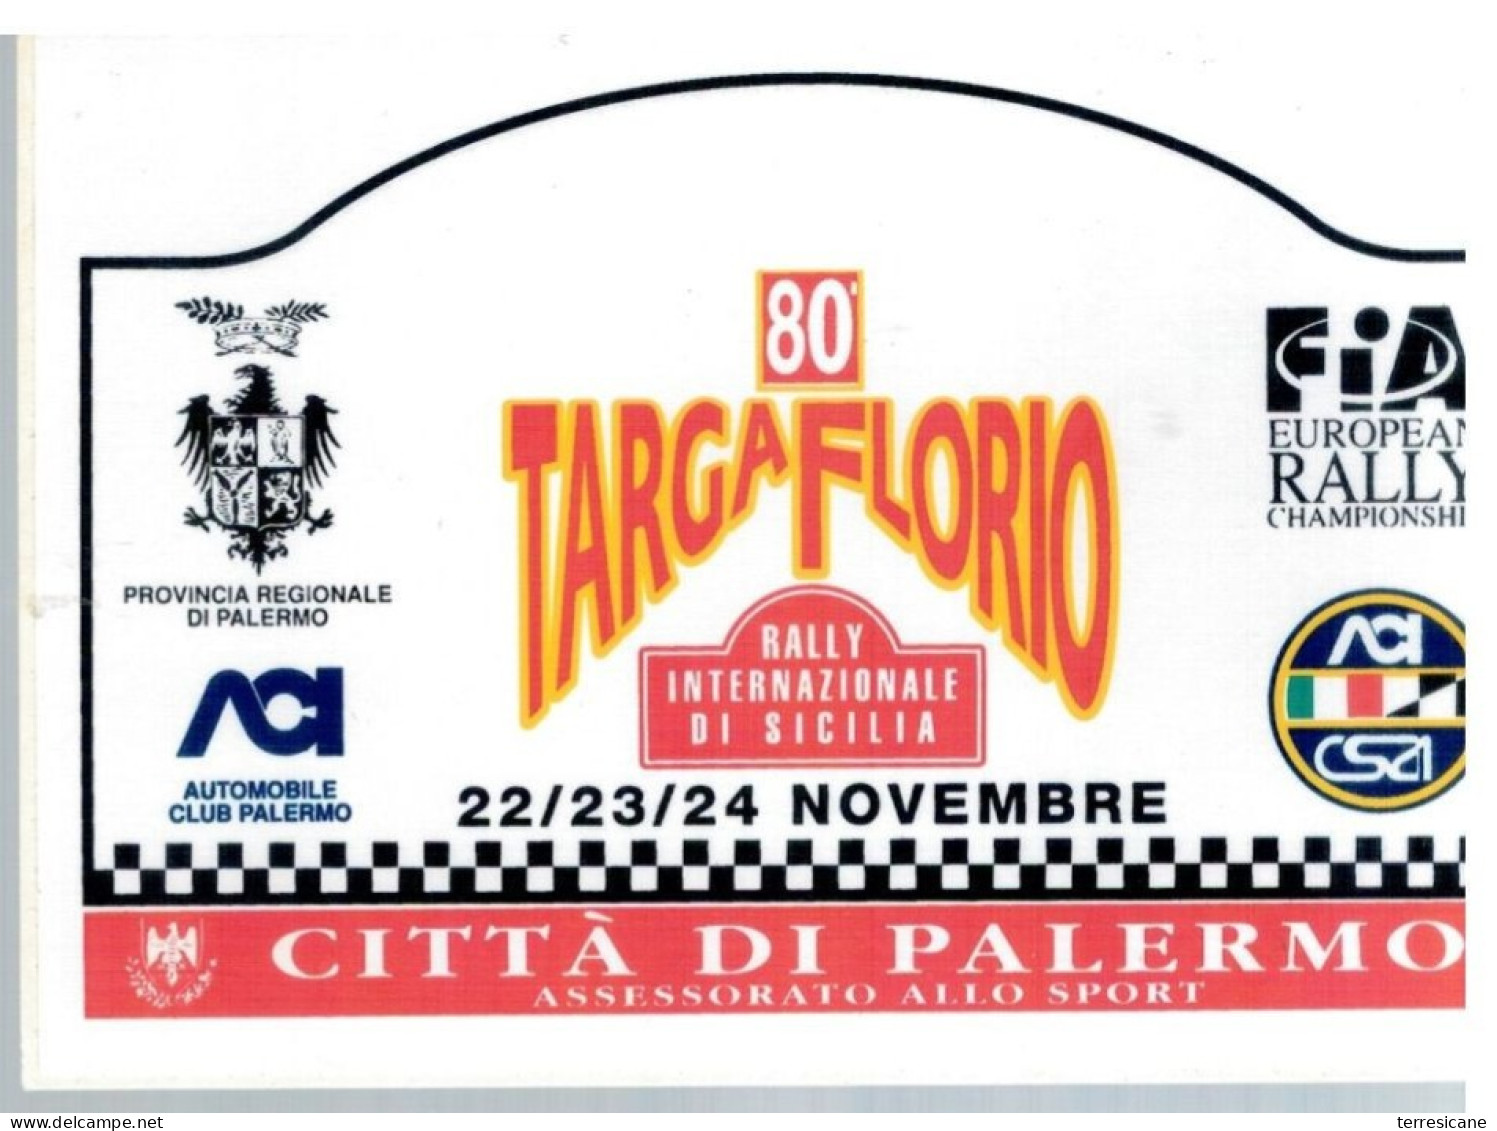 80 TARGA FLORIO 95 RALLY INTERNAZIONALE Placca Adesiva - Autosport - F1